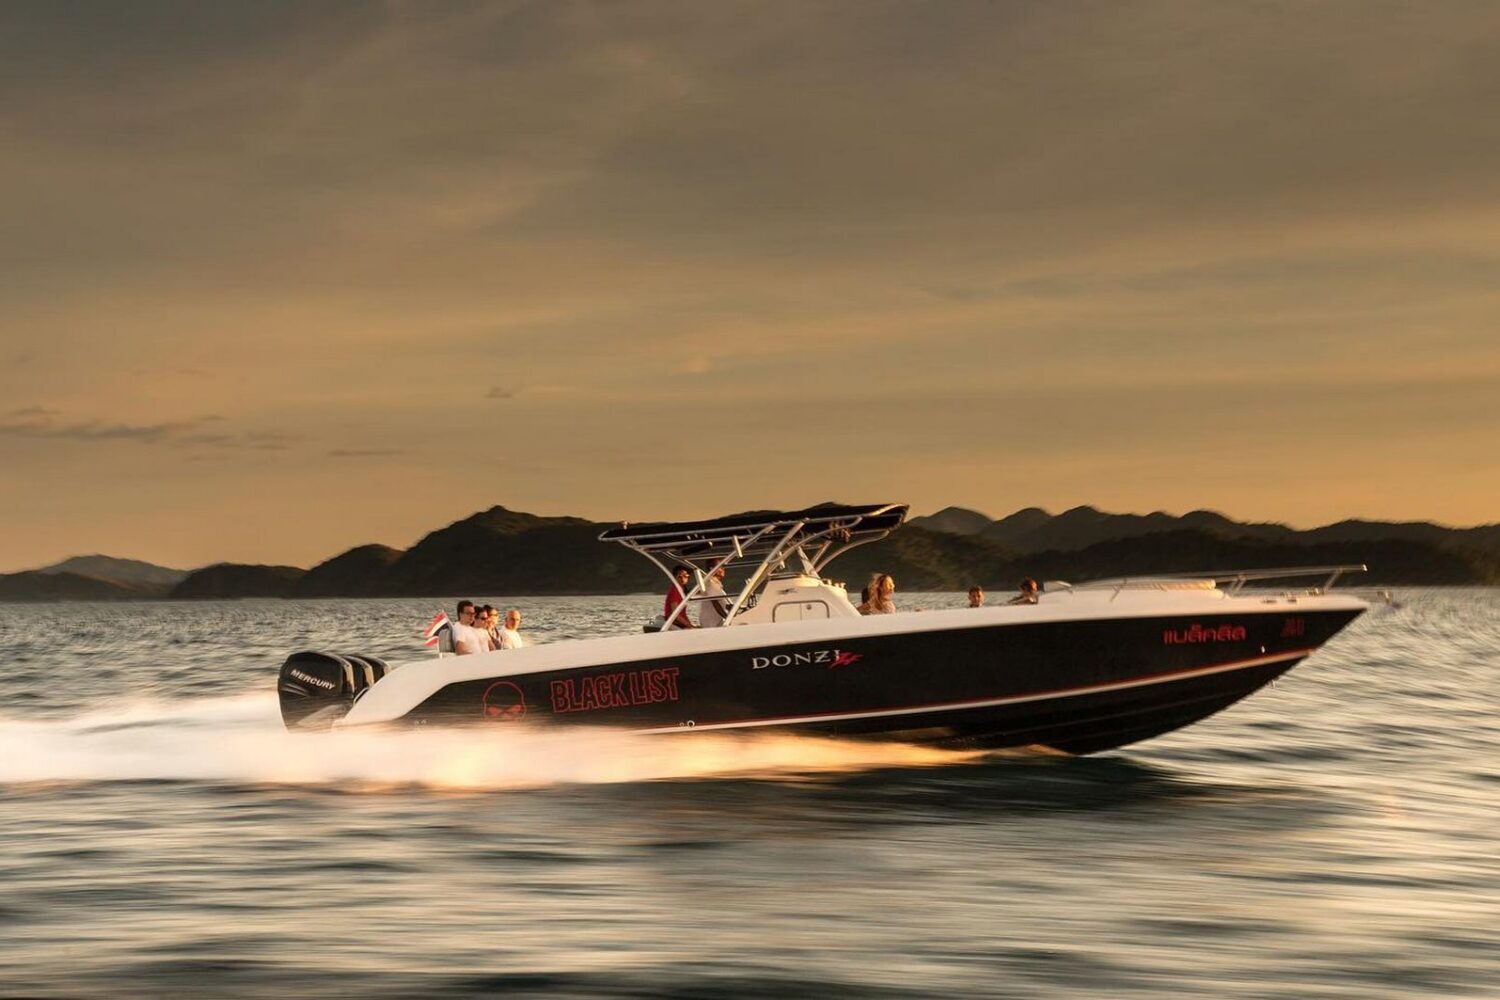 Blacklist Donzi 38 ZFX 5. Luxury speed boat charter. 